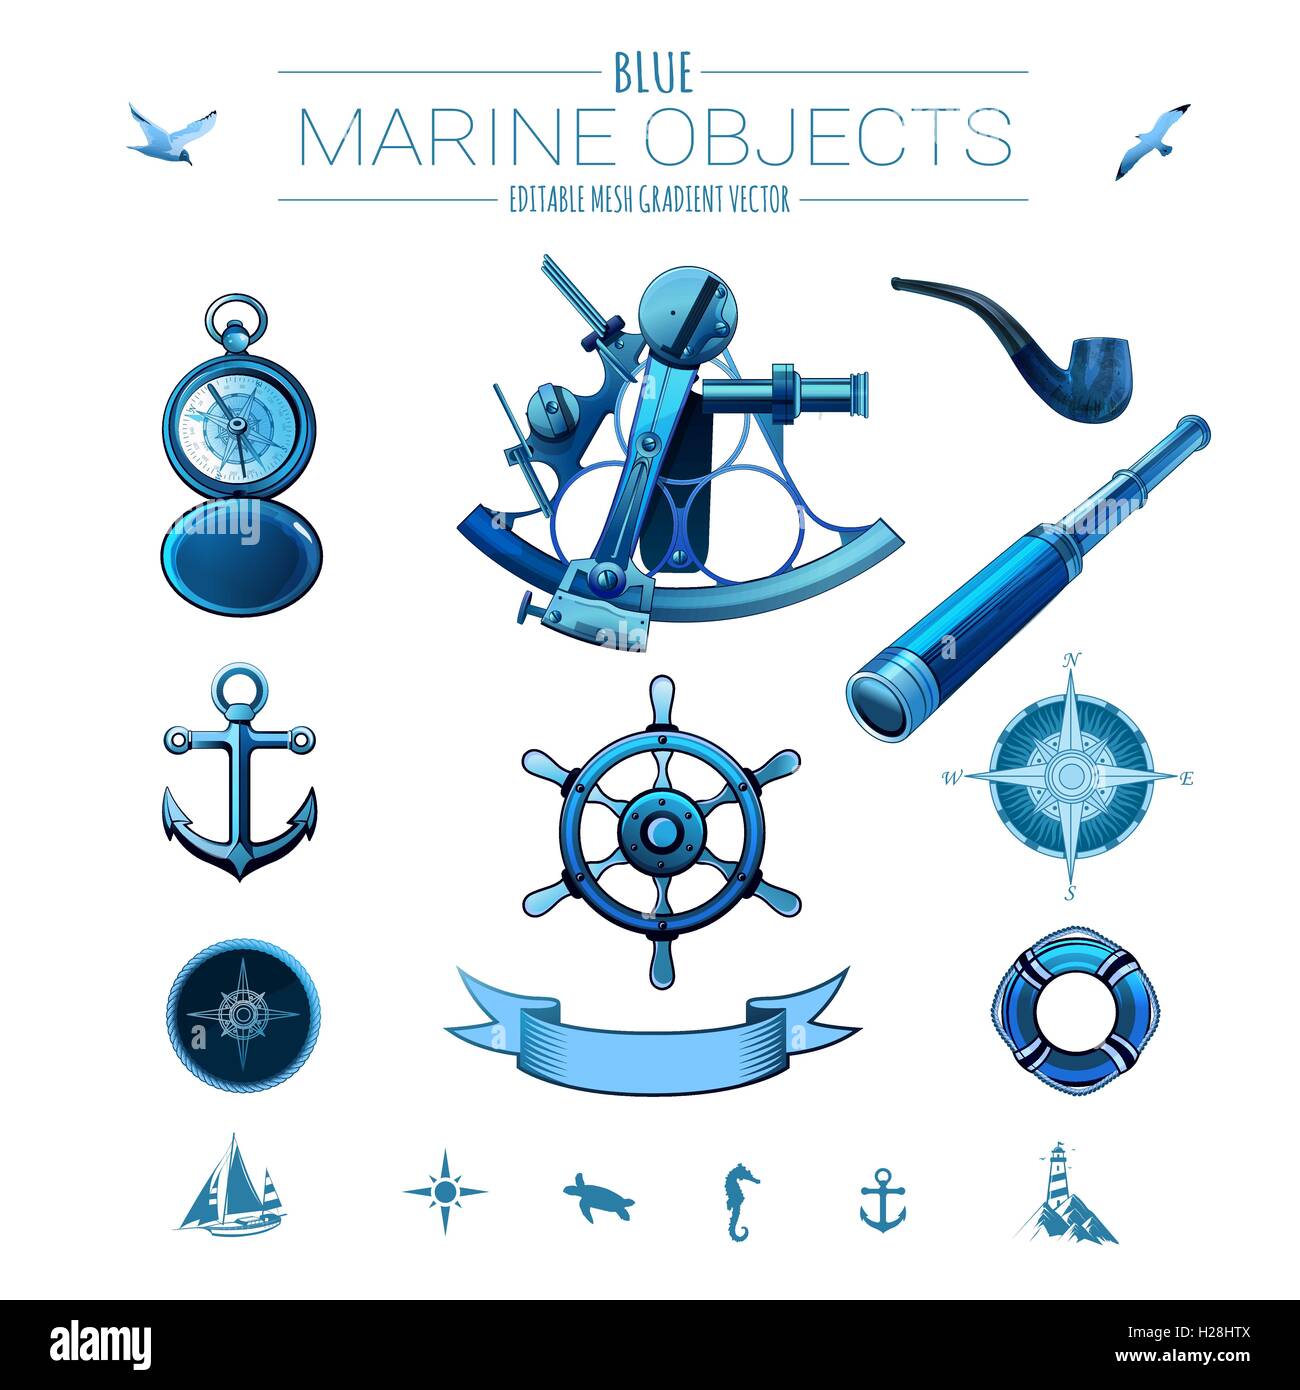 Blue marine objects Stock Vector